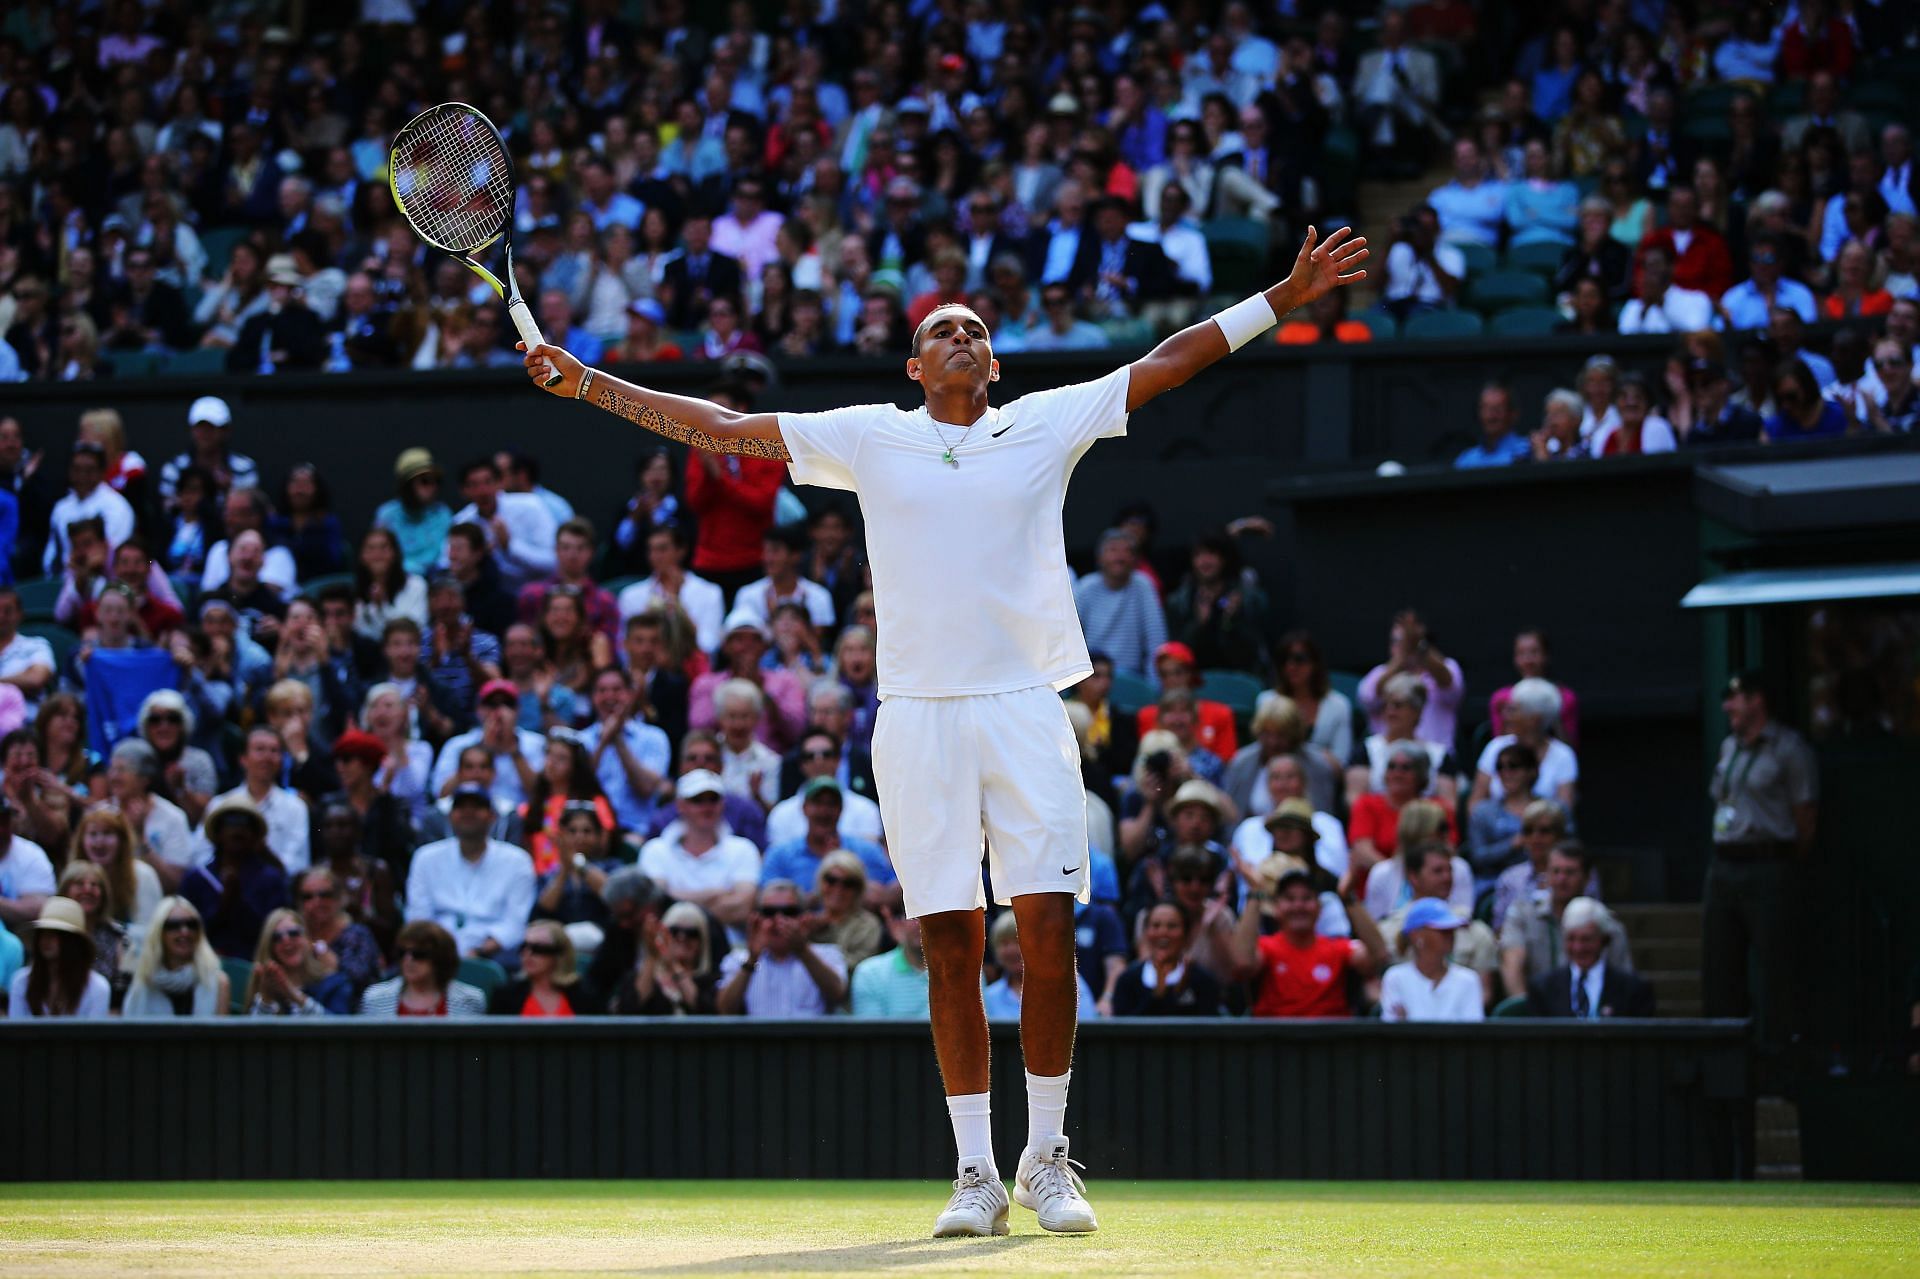 Nick Kyrgios celebrates during his match against Rafael Nadal at Wimbledon 2014.